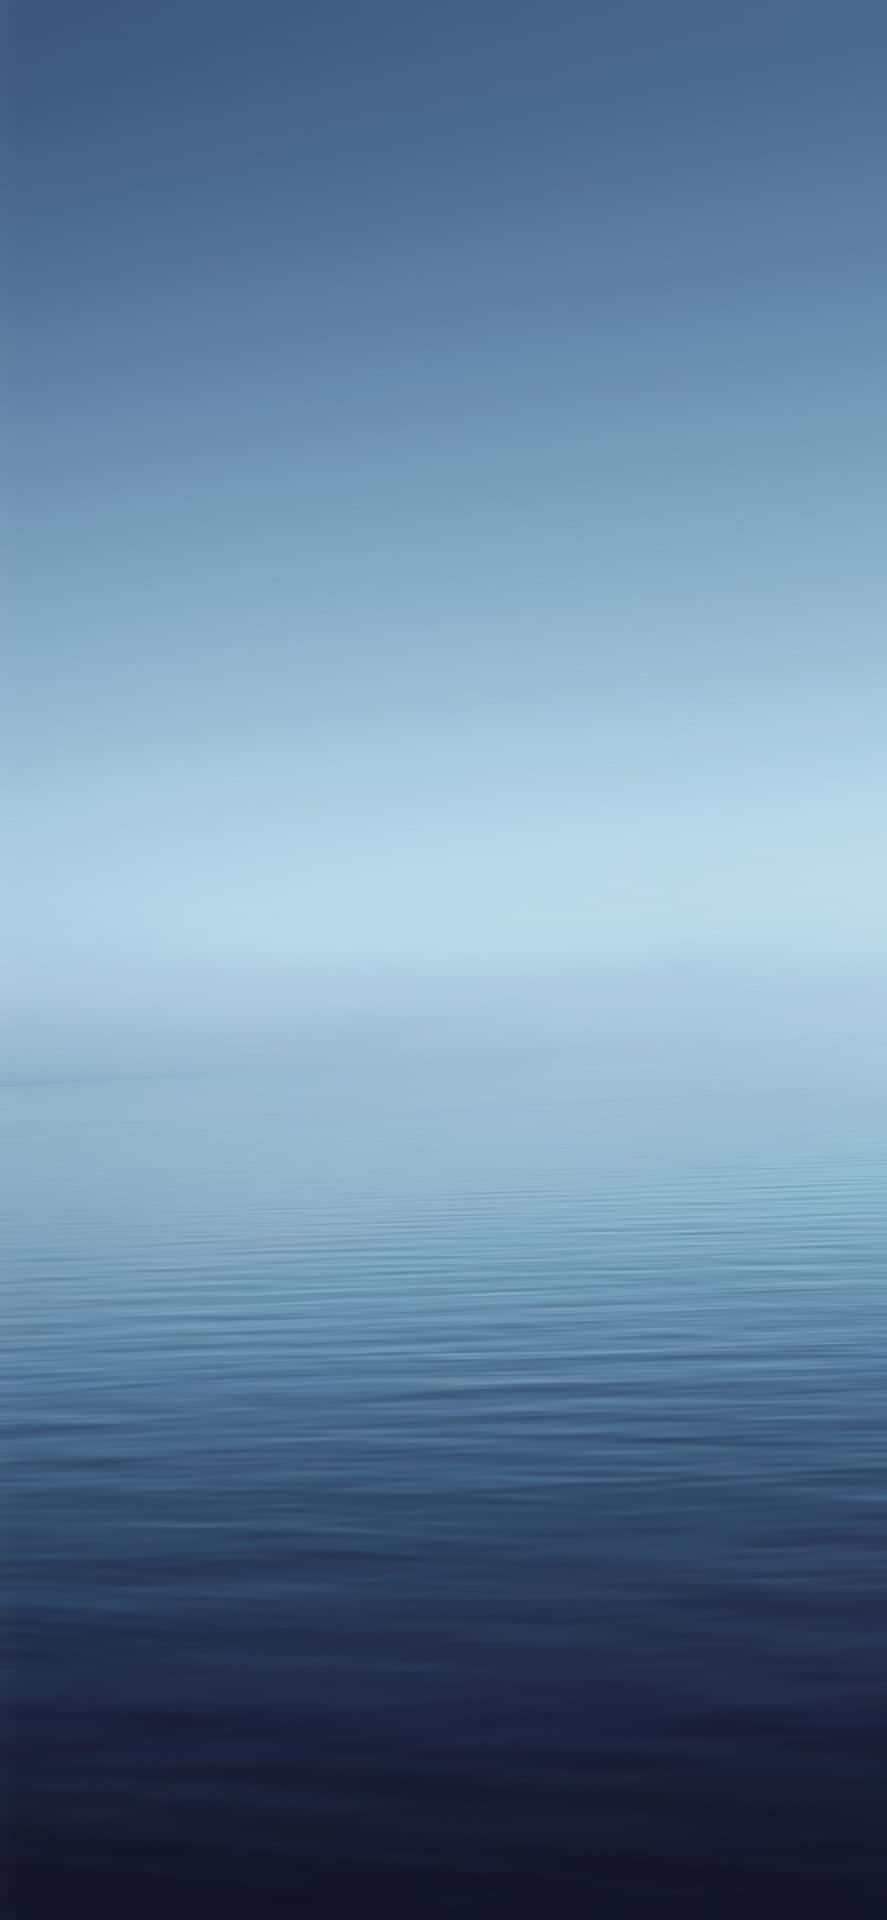 Stunning Still Water View on iPhone 6s Default Wallpaper